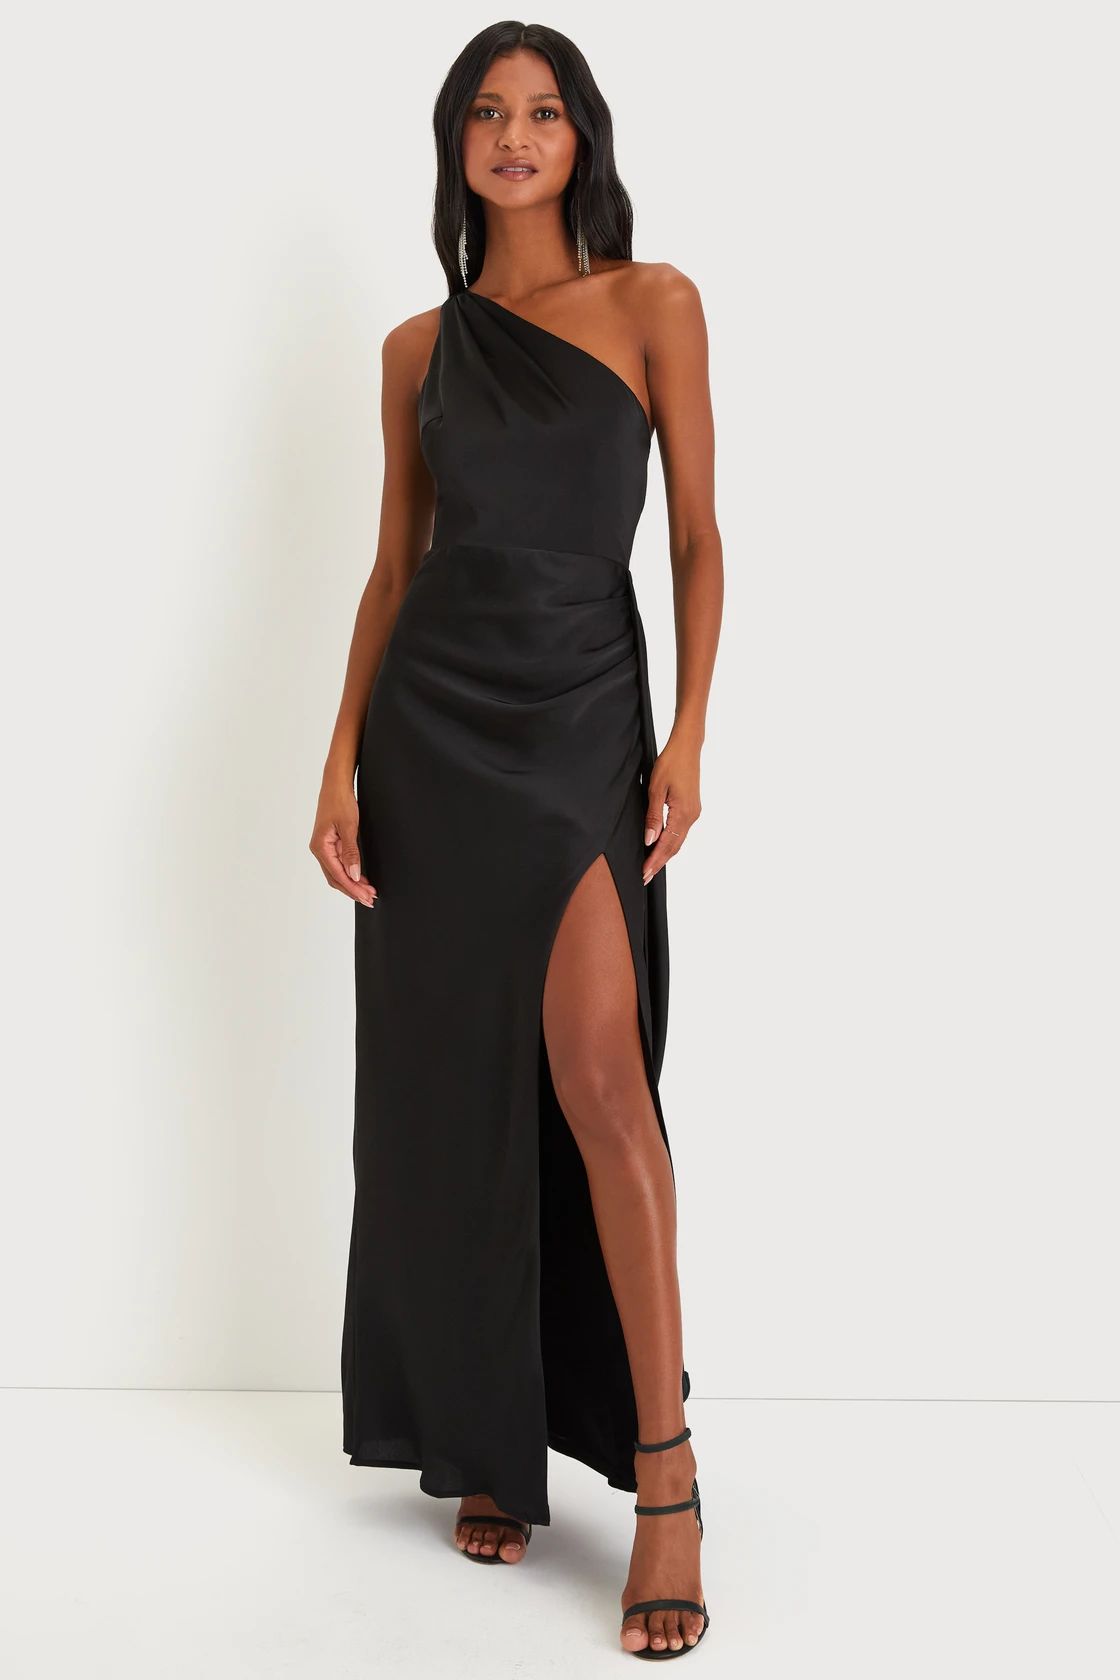 Signature Elegance Black Satin One-Shoulder Maxi Dress | Lulus